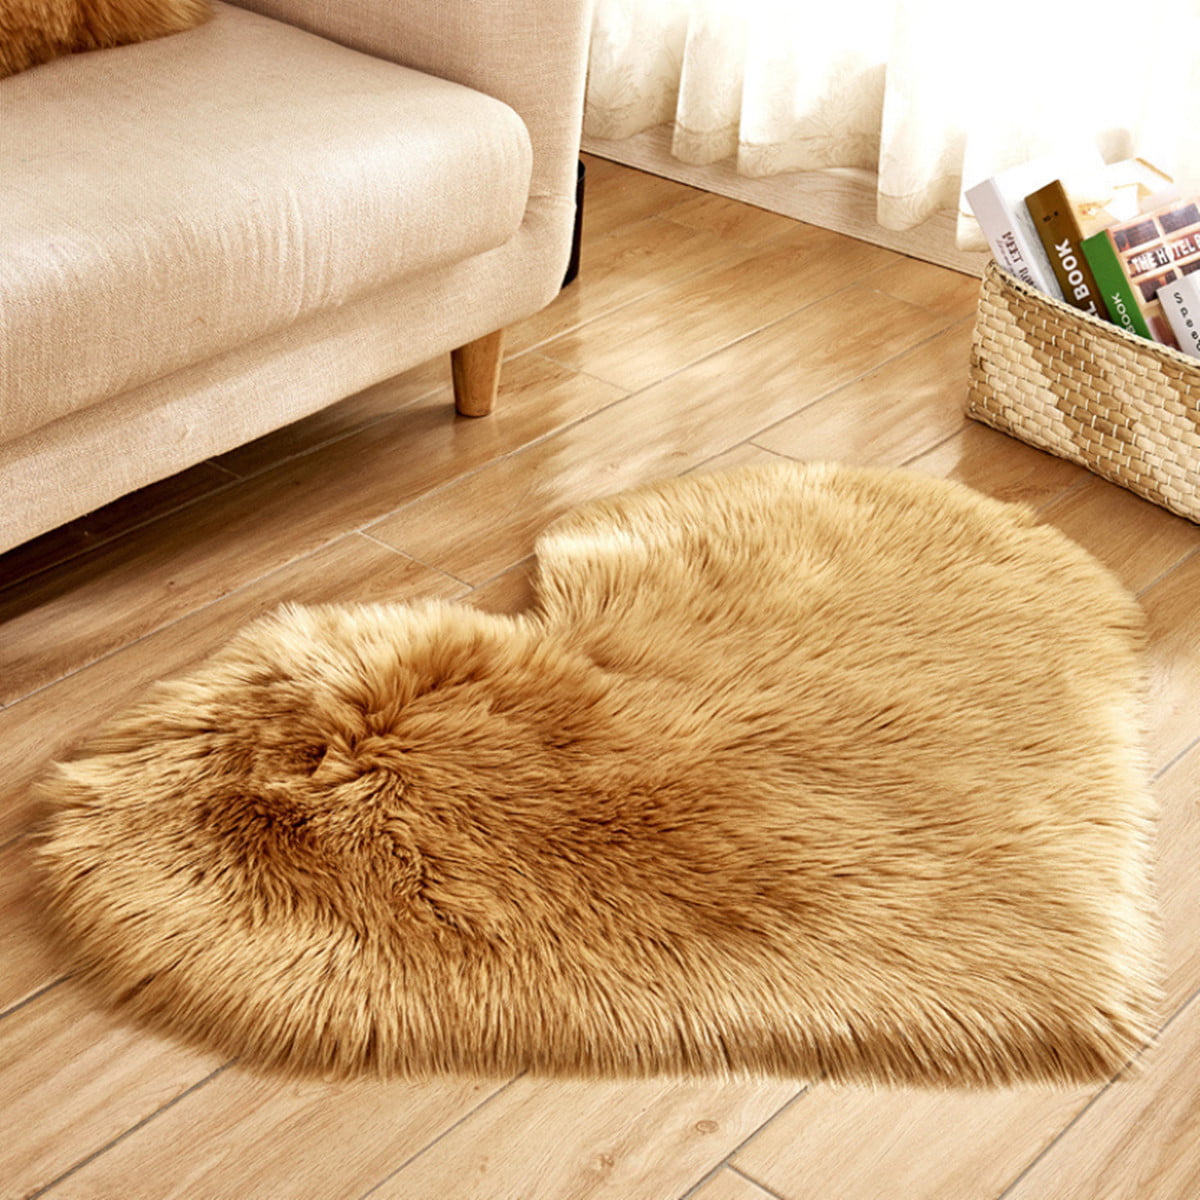 Faux fur area rug Shaggy Rug rectangle shape plush Sheepskin Bedroom living room